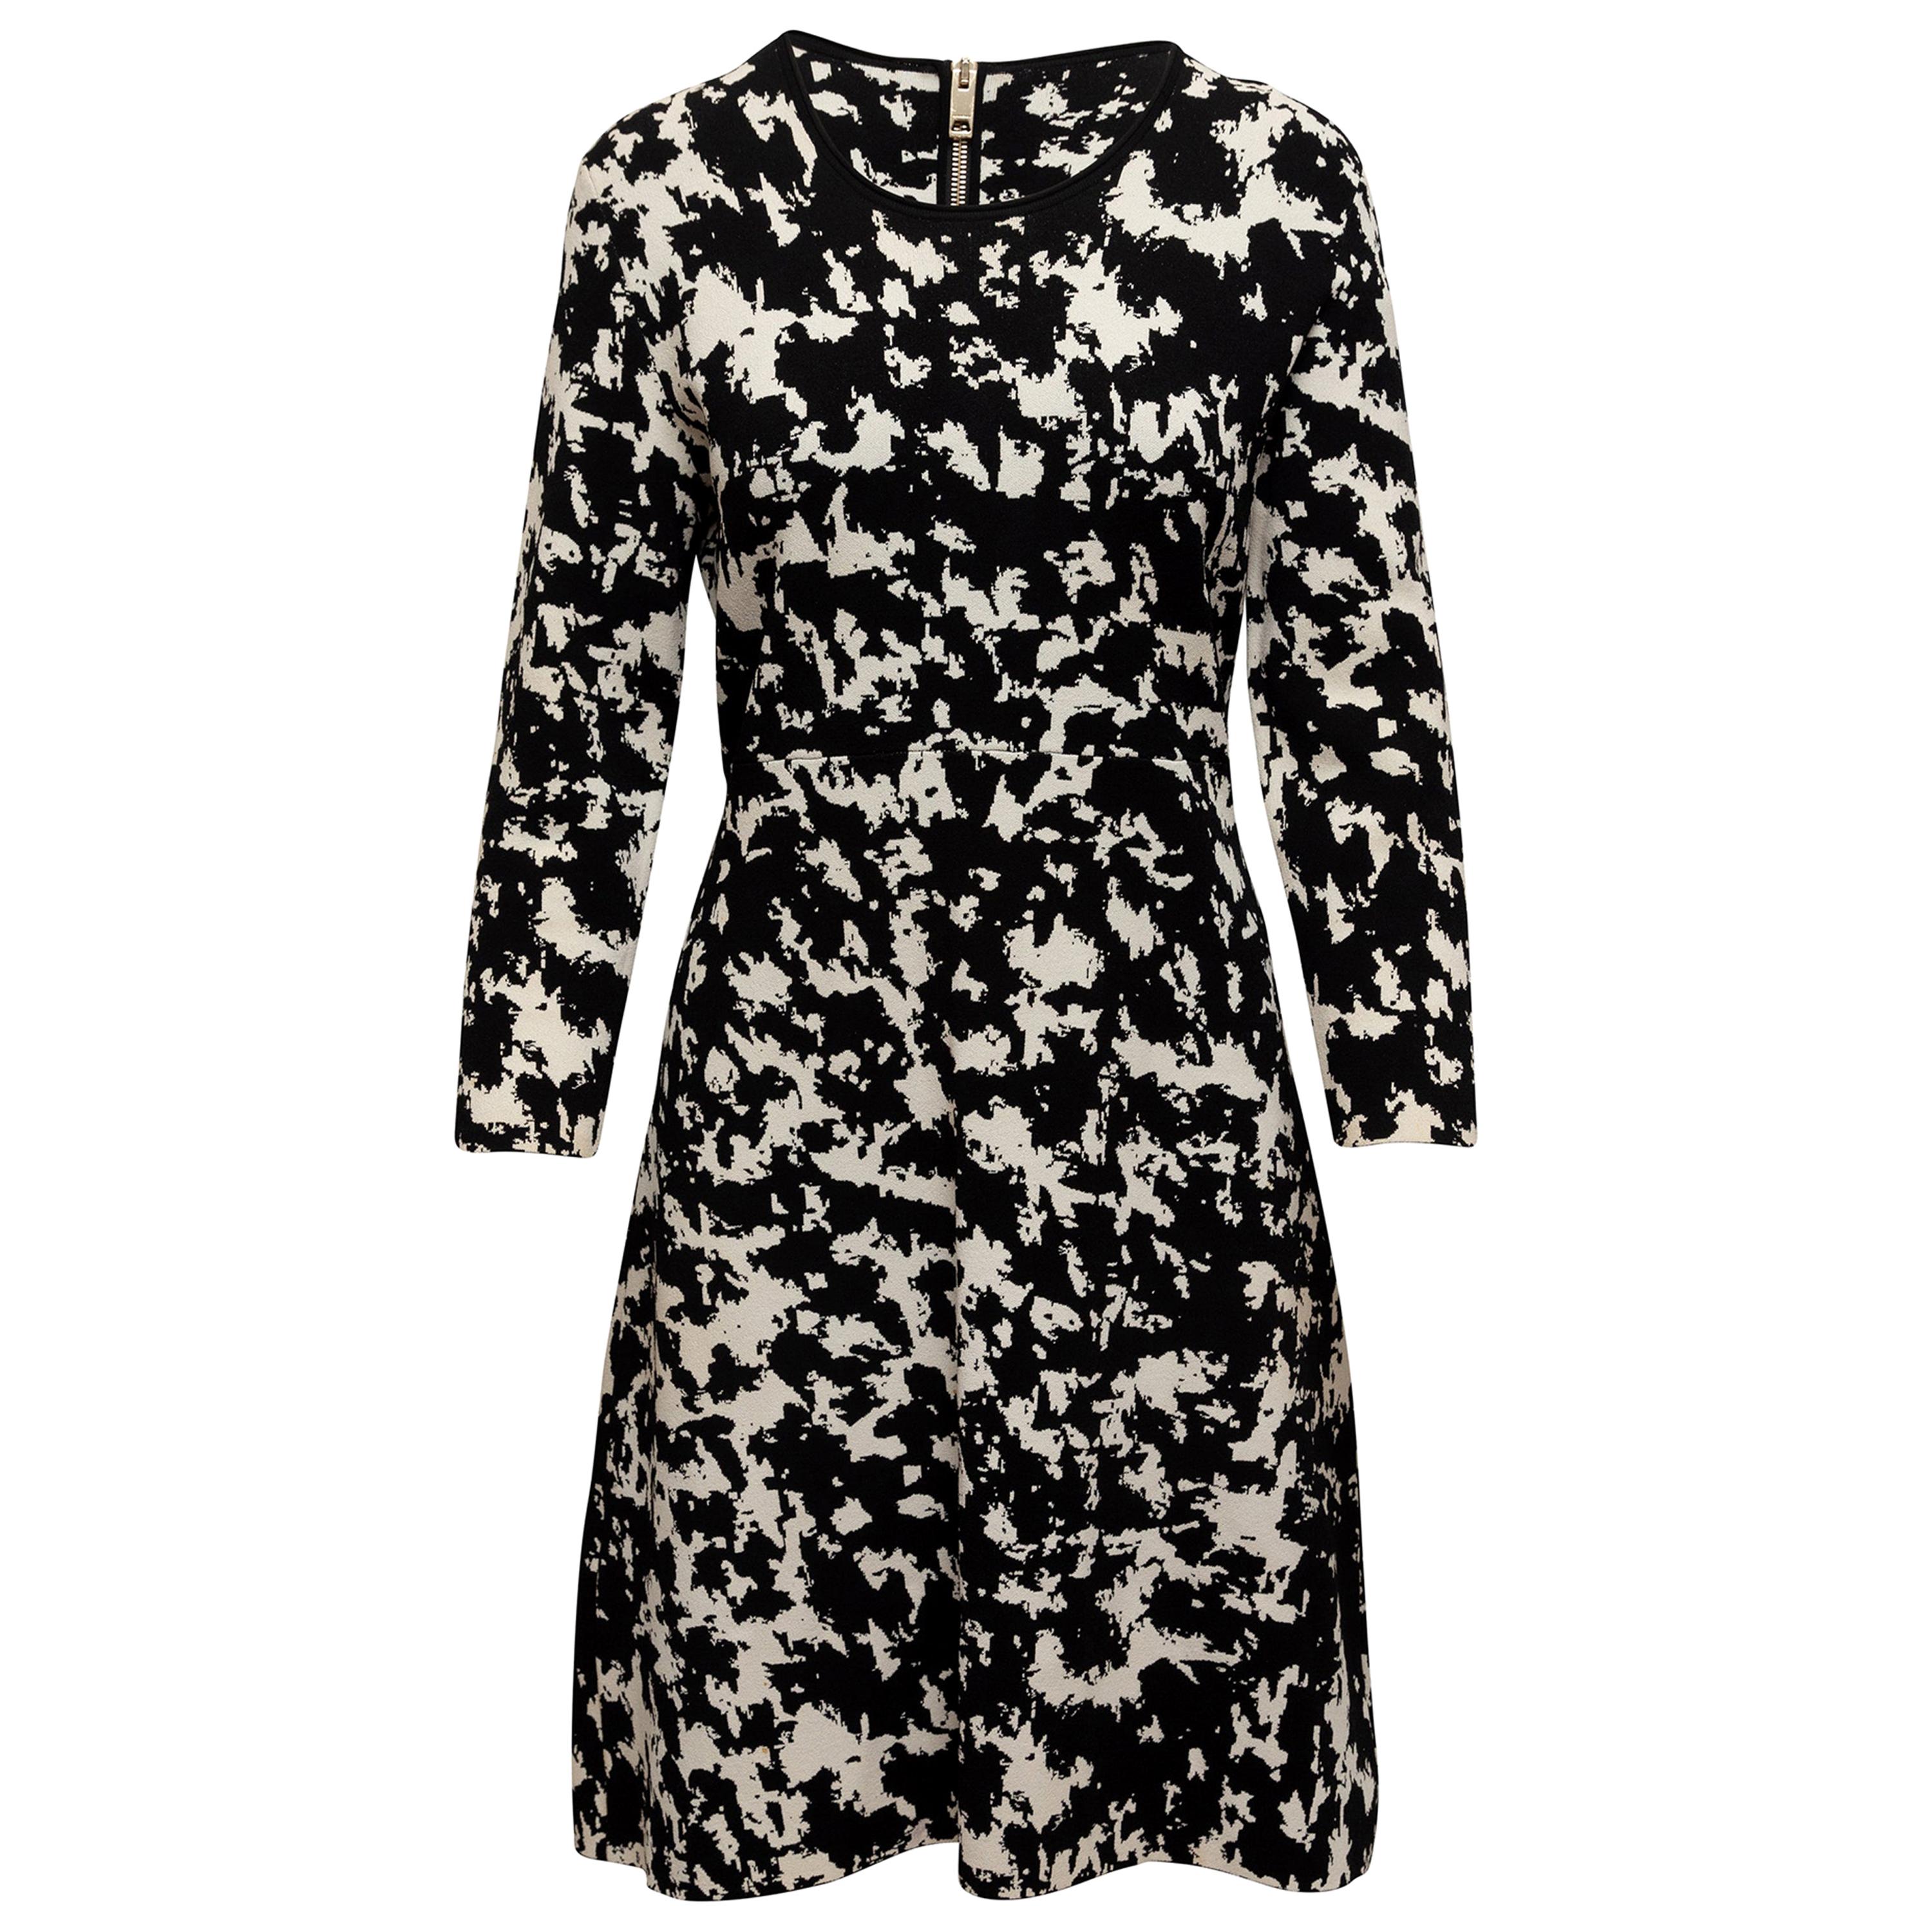 Burberry Black & White Intarsia Speckled Dress